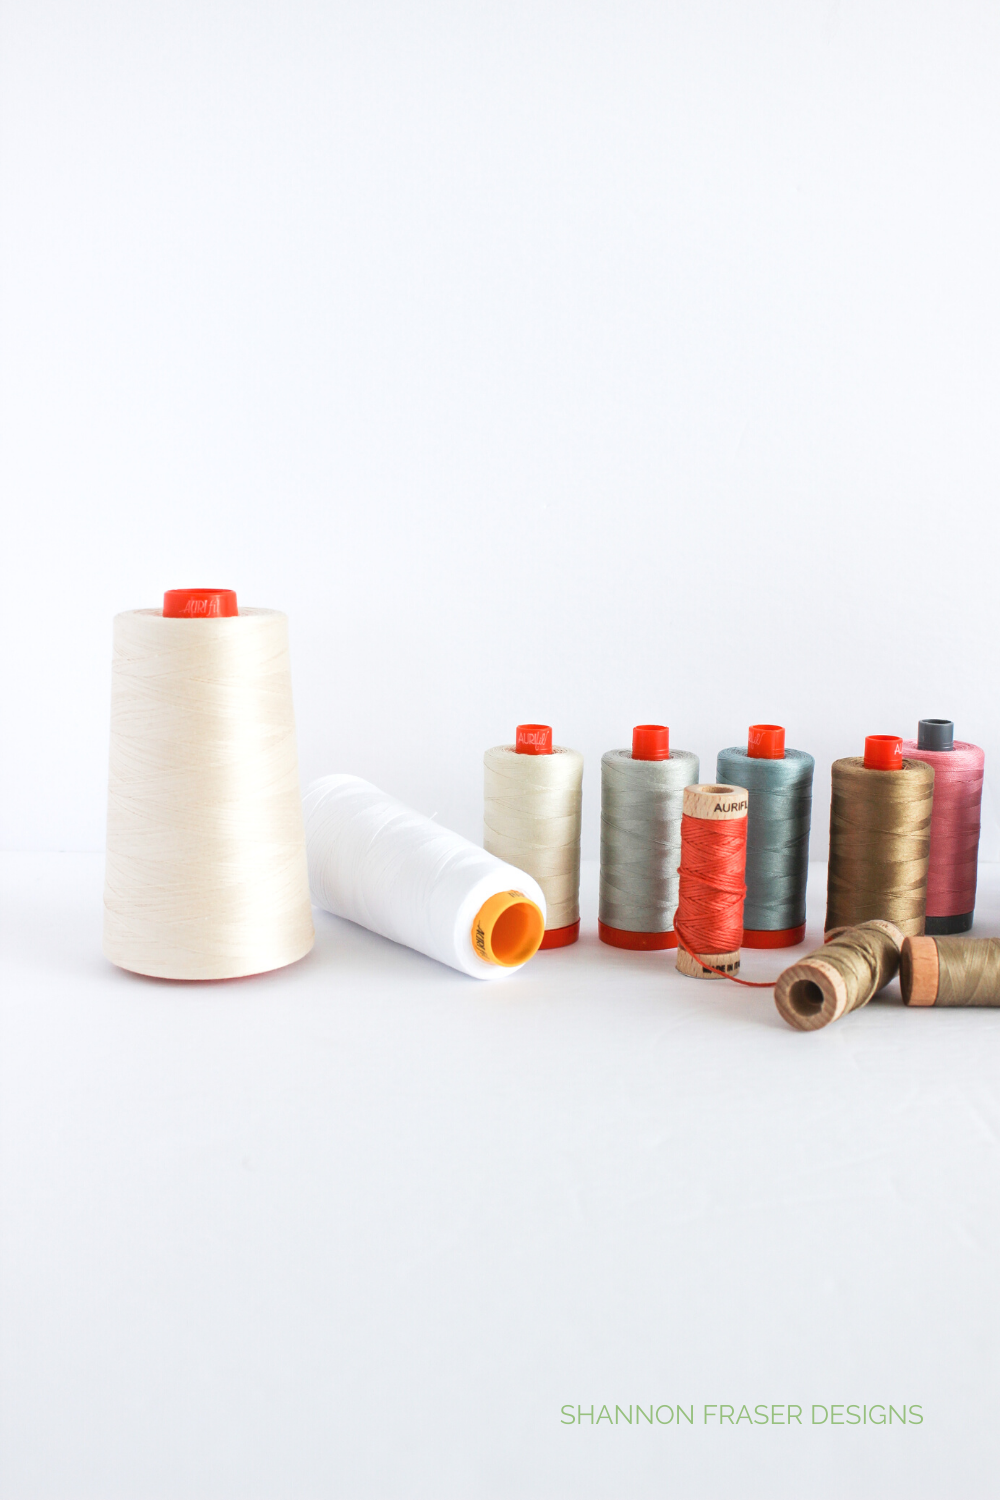 Aurifil Thread spools including a cone in Light Sand | Shannon Fraser Designs Aurifil Artisan #threadcollection